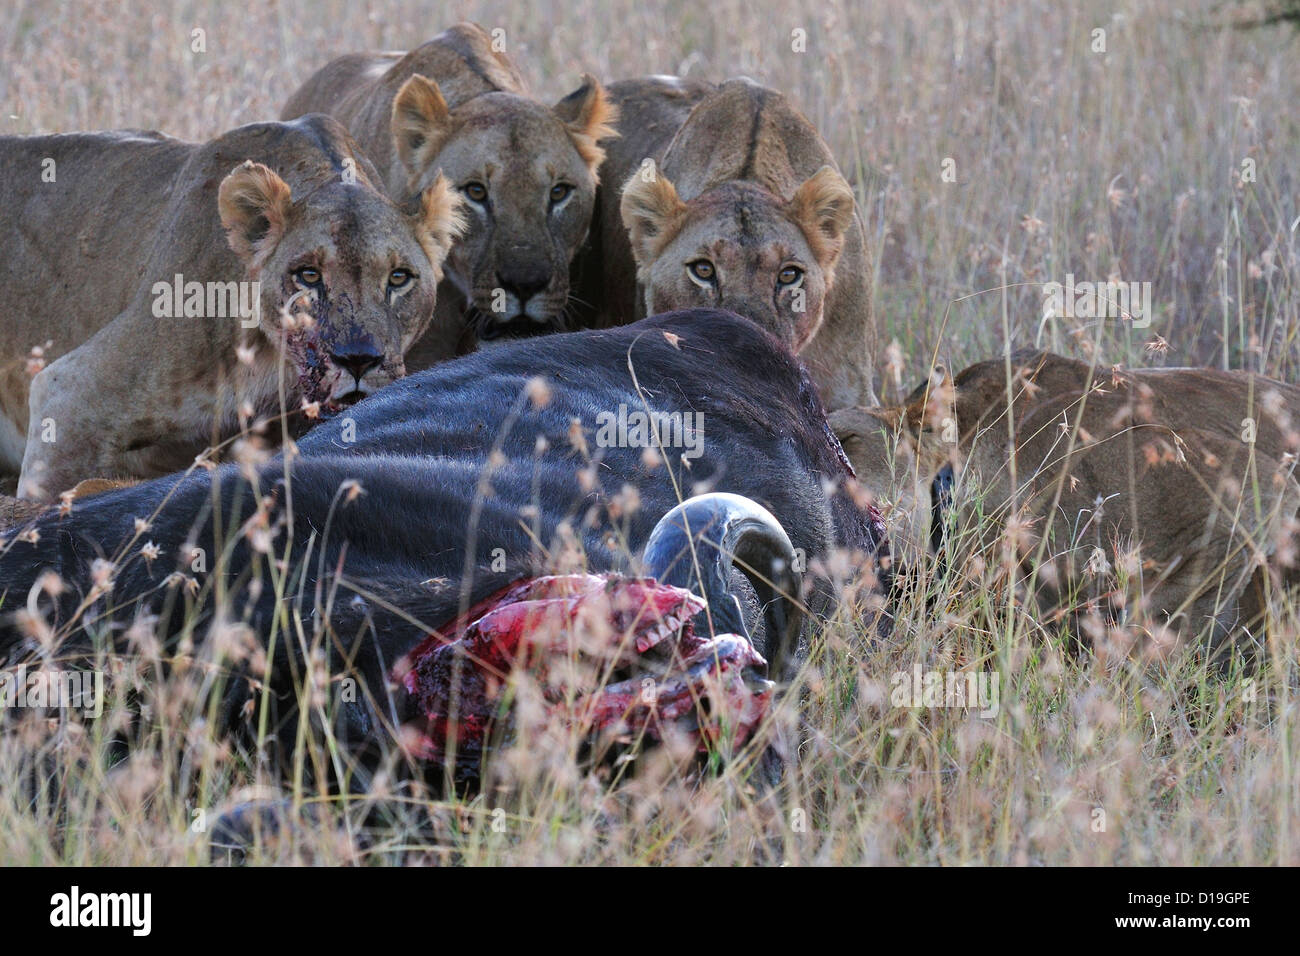 Lions (Panthera leo), predation on African Buffalo Syncerus caffer, Mugie Sanctuary, Kenya, Africa Stock Photo